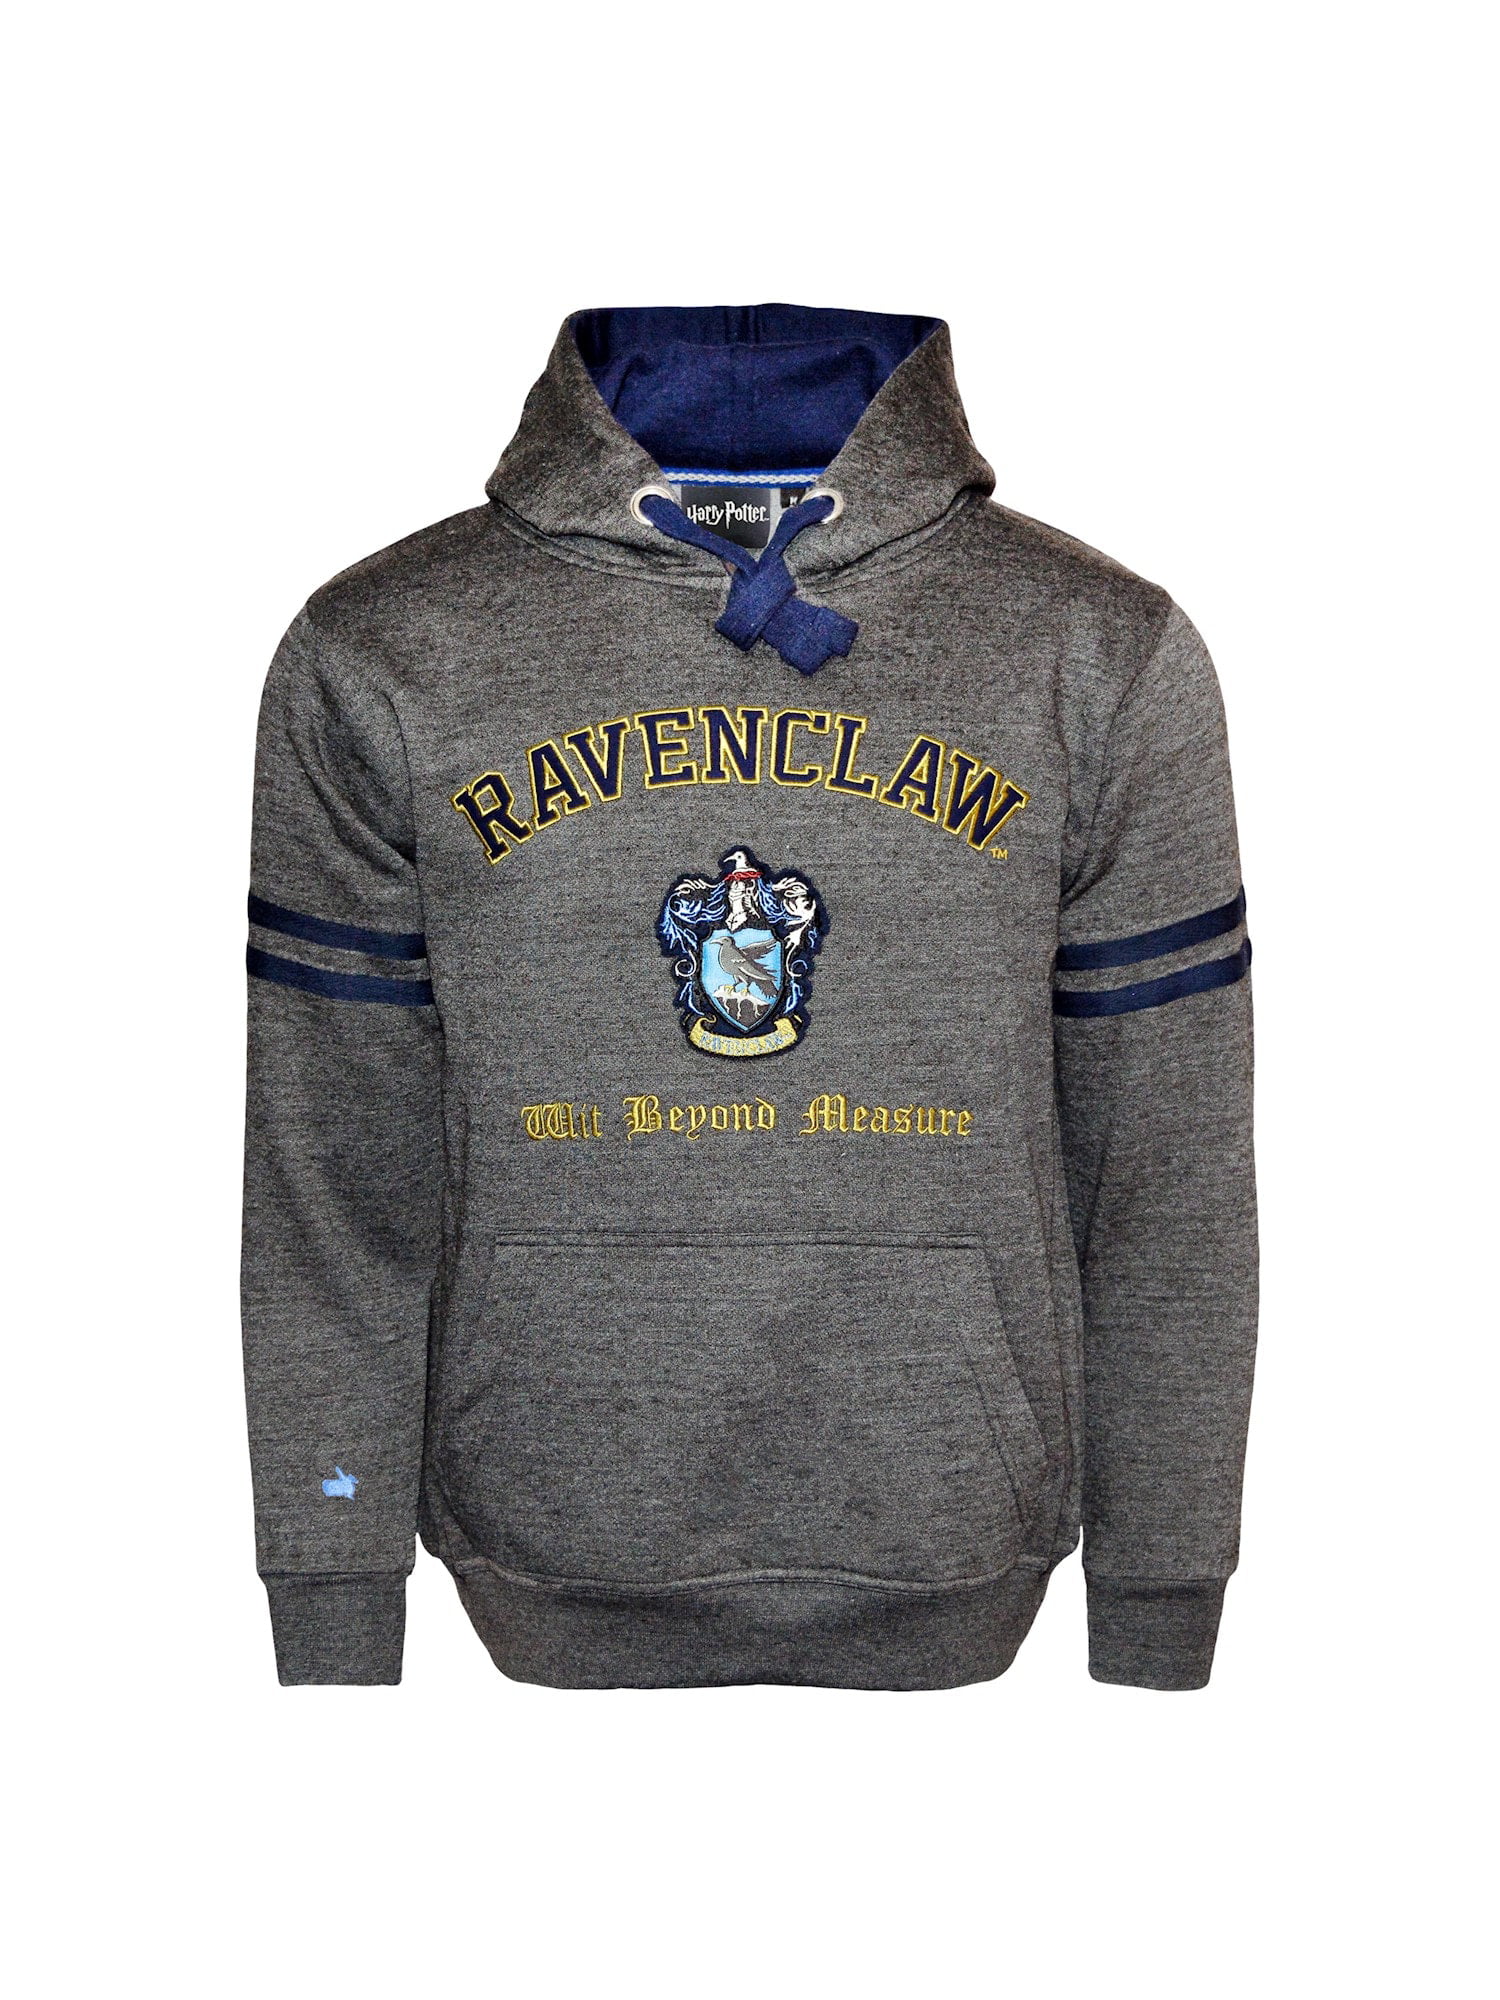 Hot Harry Potter Ravenclaw Winter Hoodie Cosplay Warm Zipper Jacket Sweatshirt